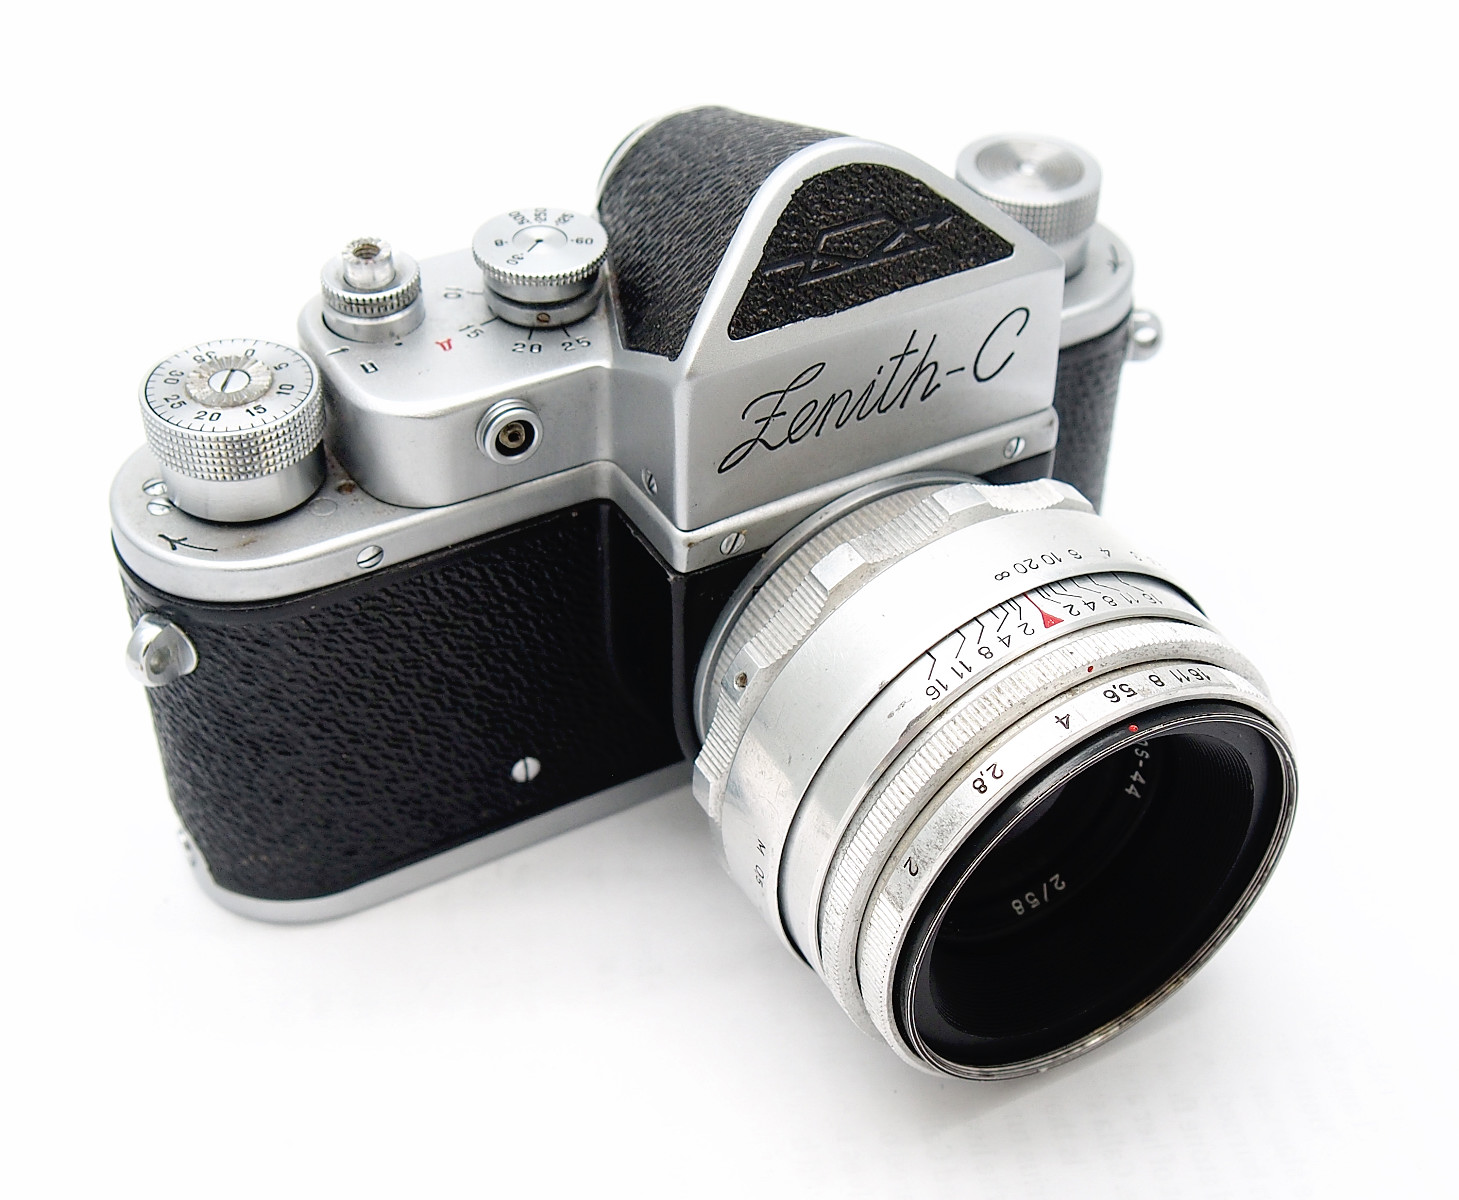 Zenith-C 35mm SLR with Helios-44 55mm F2 (Biotar) Lens #9021